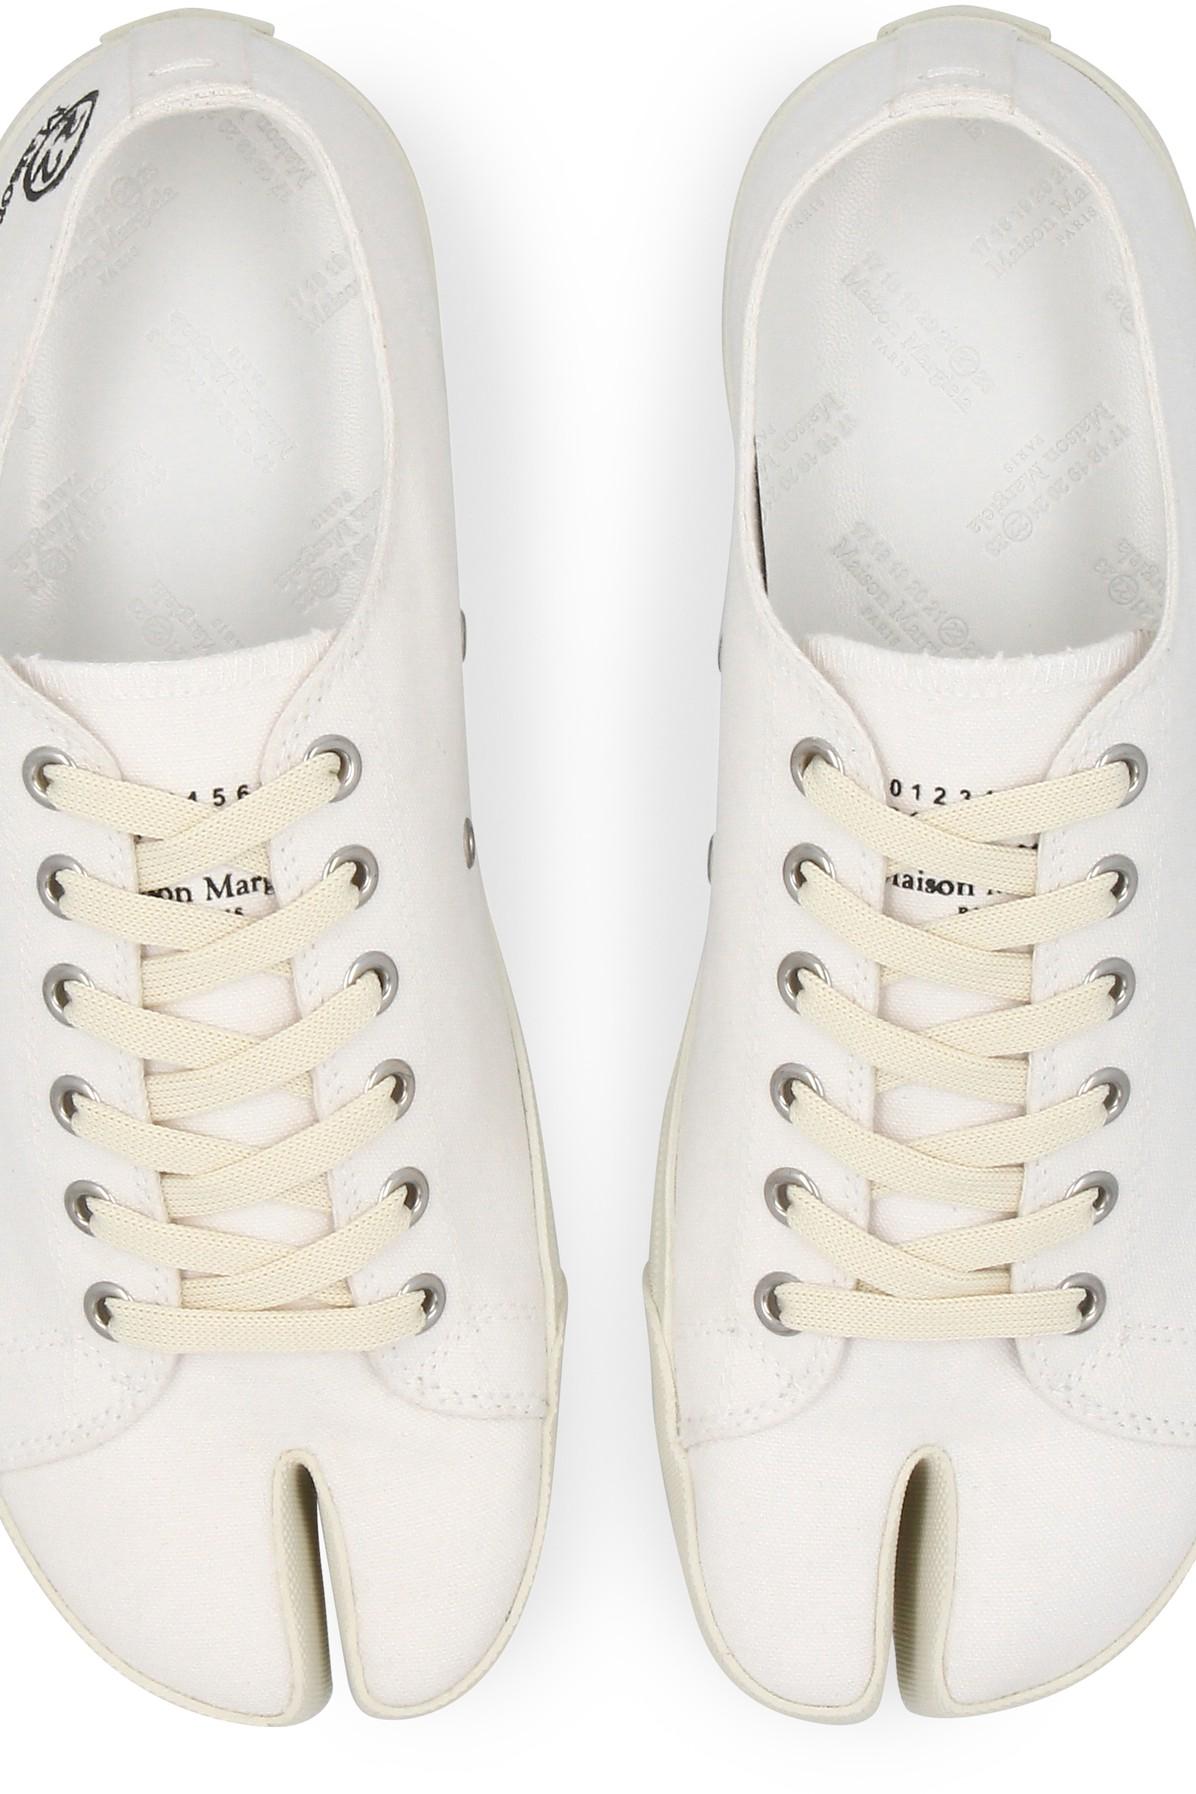 Maison Margiela Cotton Tabi Sneakers in White for Men - Save 44 